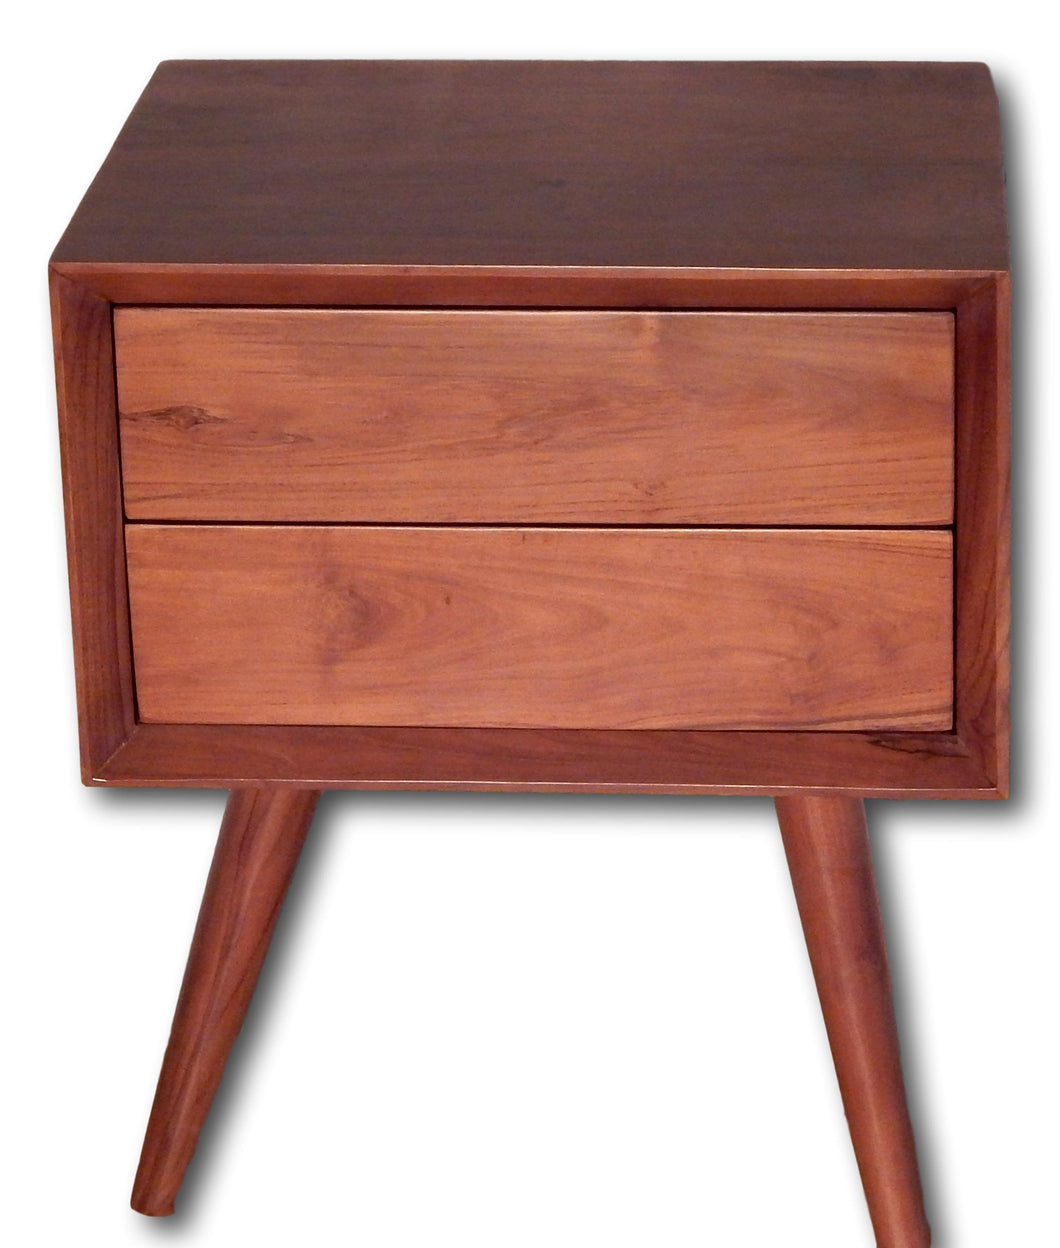 ~ 91 ~ solid wood furniture tables ; Side Table Bedroom Furniture from Solid Wood ; Furniture solid Wood Images, Wood Solid furniture, solid wood furniture, Hardwood Furniture